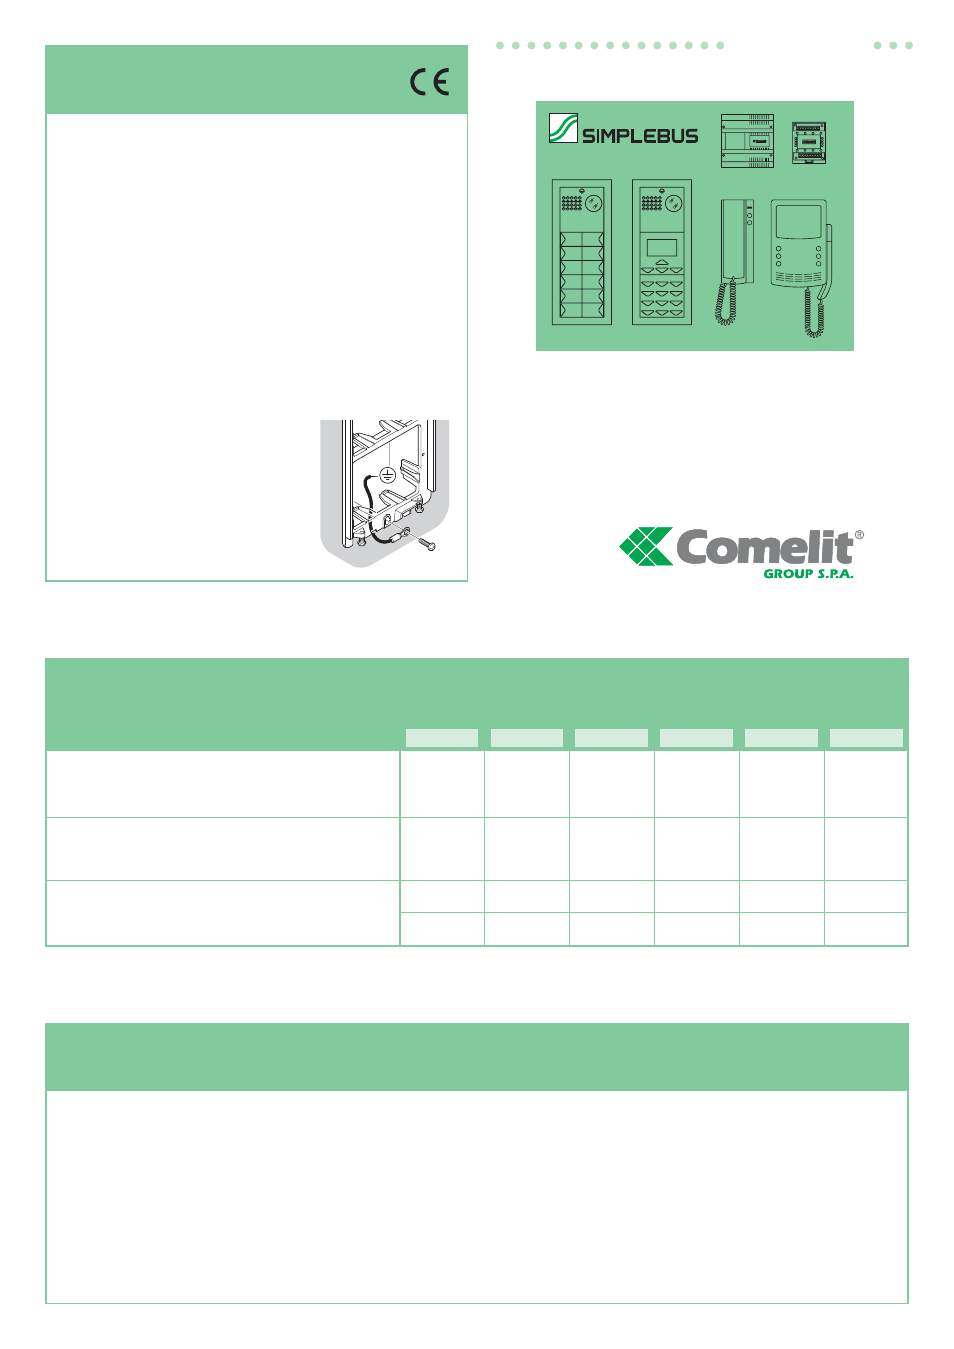 Comelit FT SB 07 User Manual | 12 pages | Original mode